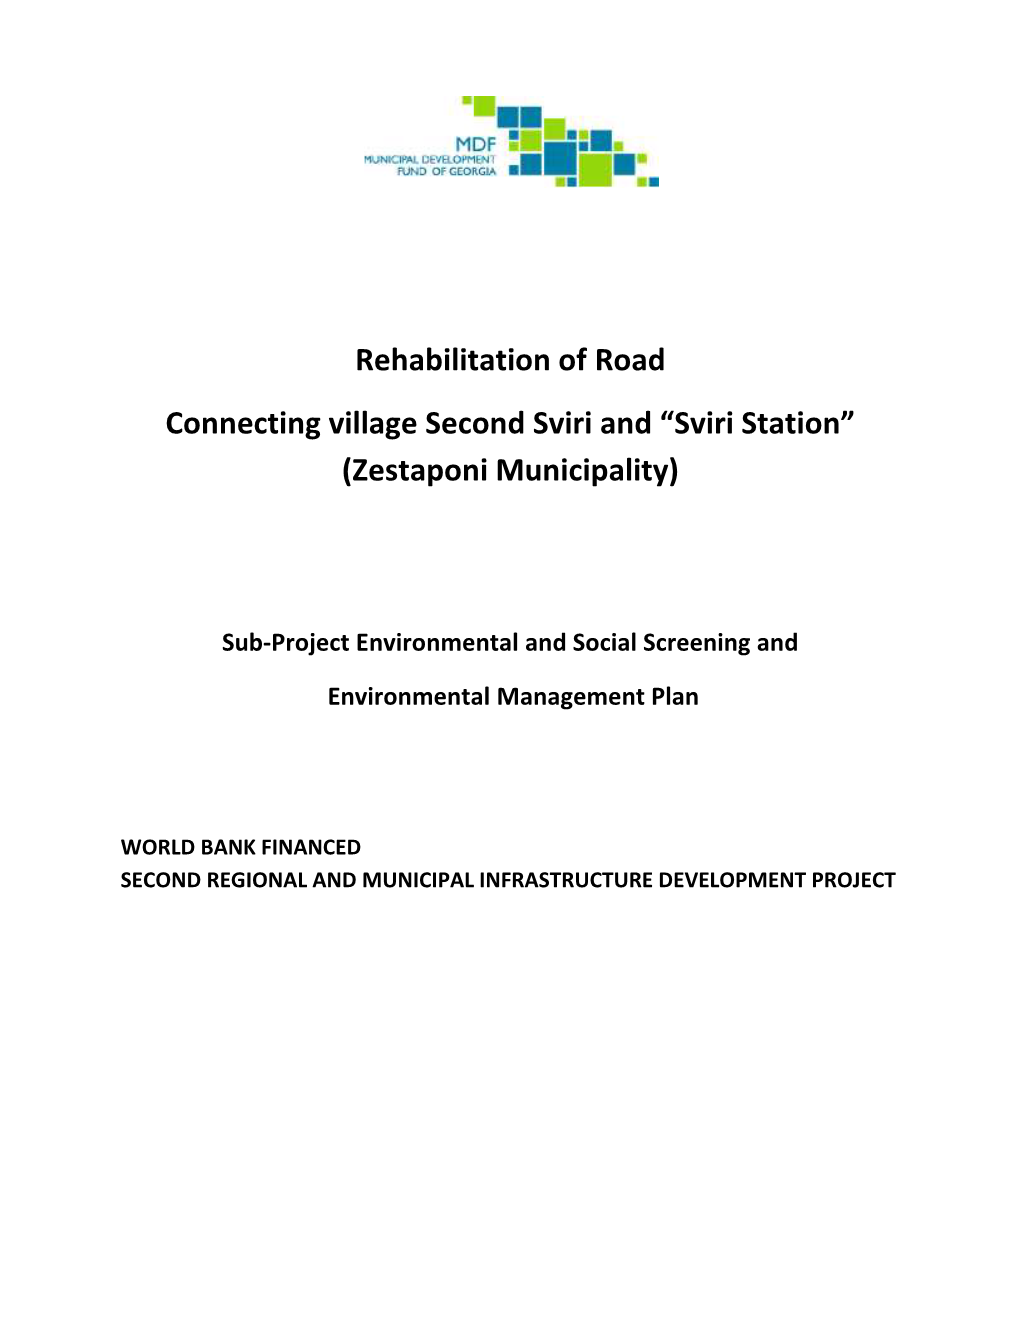 Rehabilitation of Road Connecting Village Second Sviri and “Sviri Station” (Zestaponi Municipality)